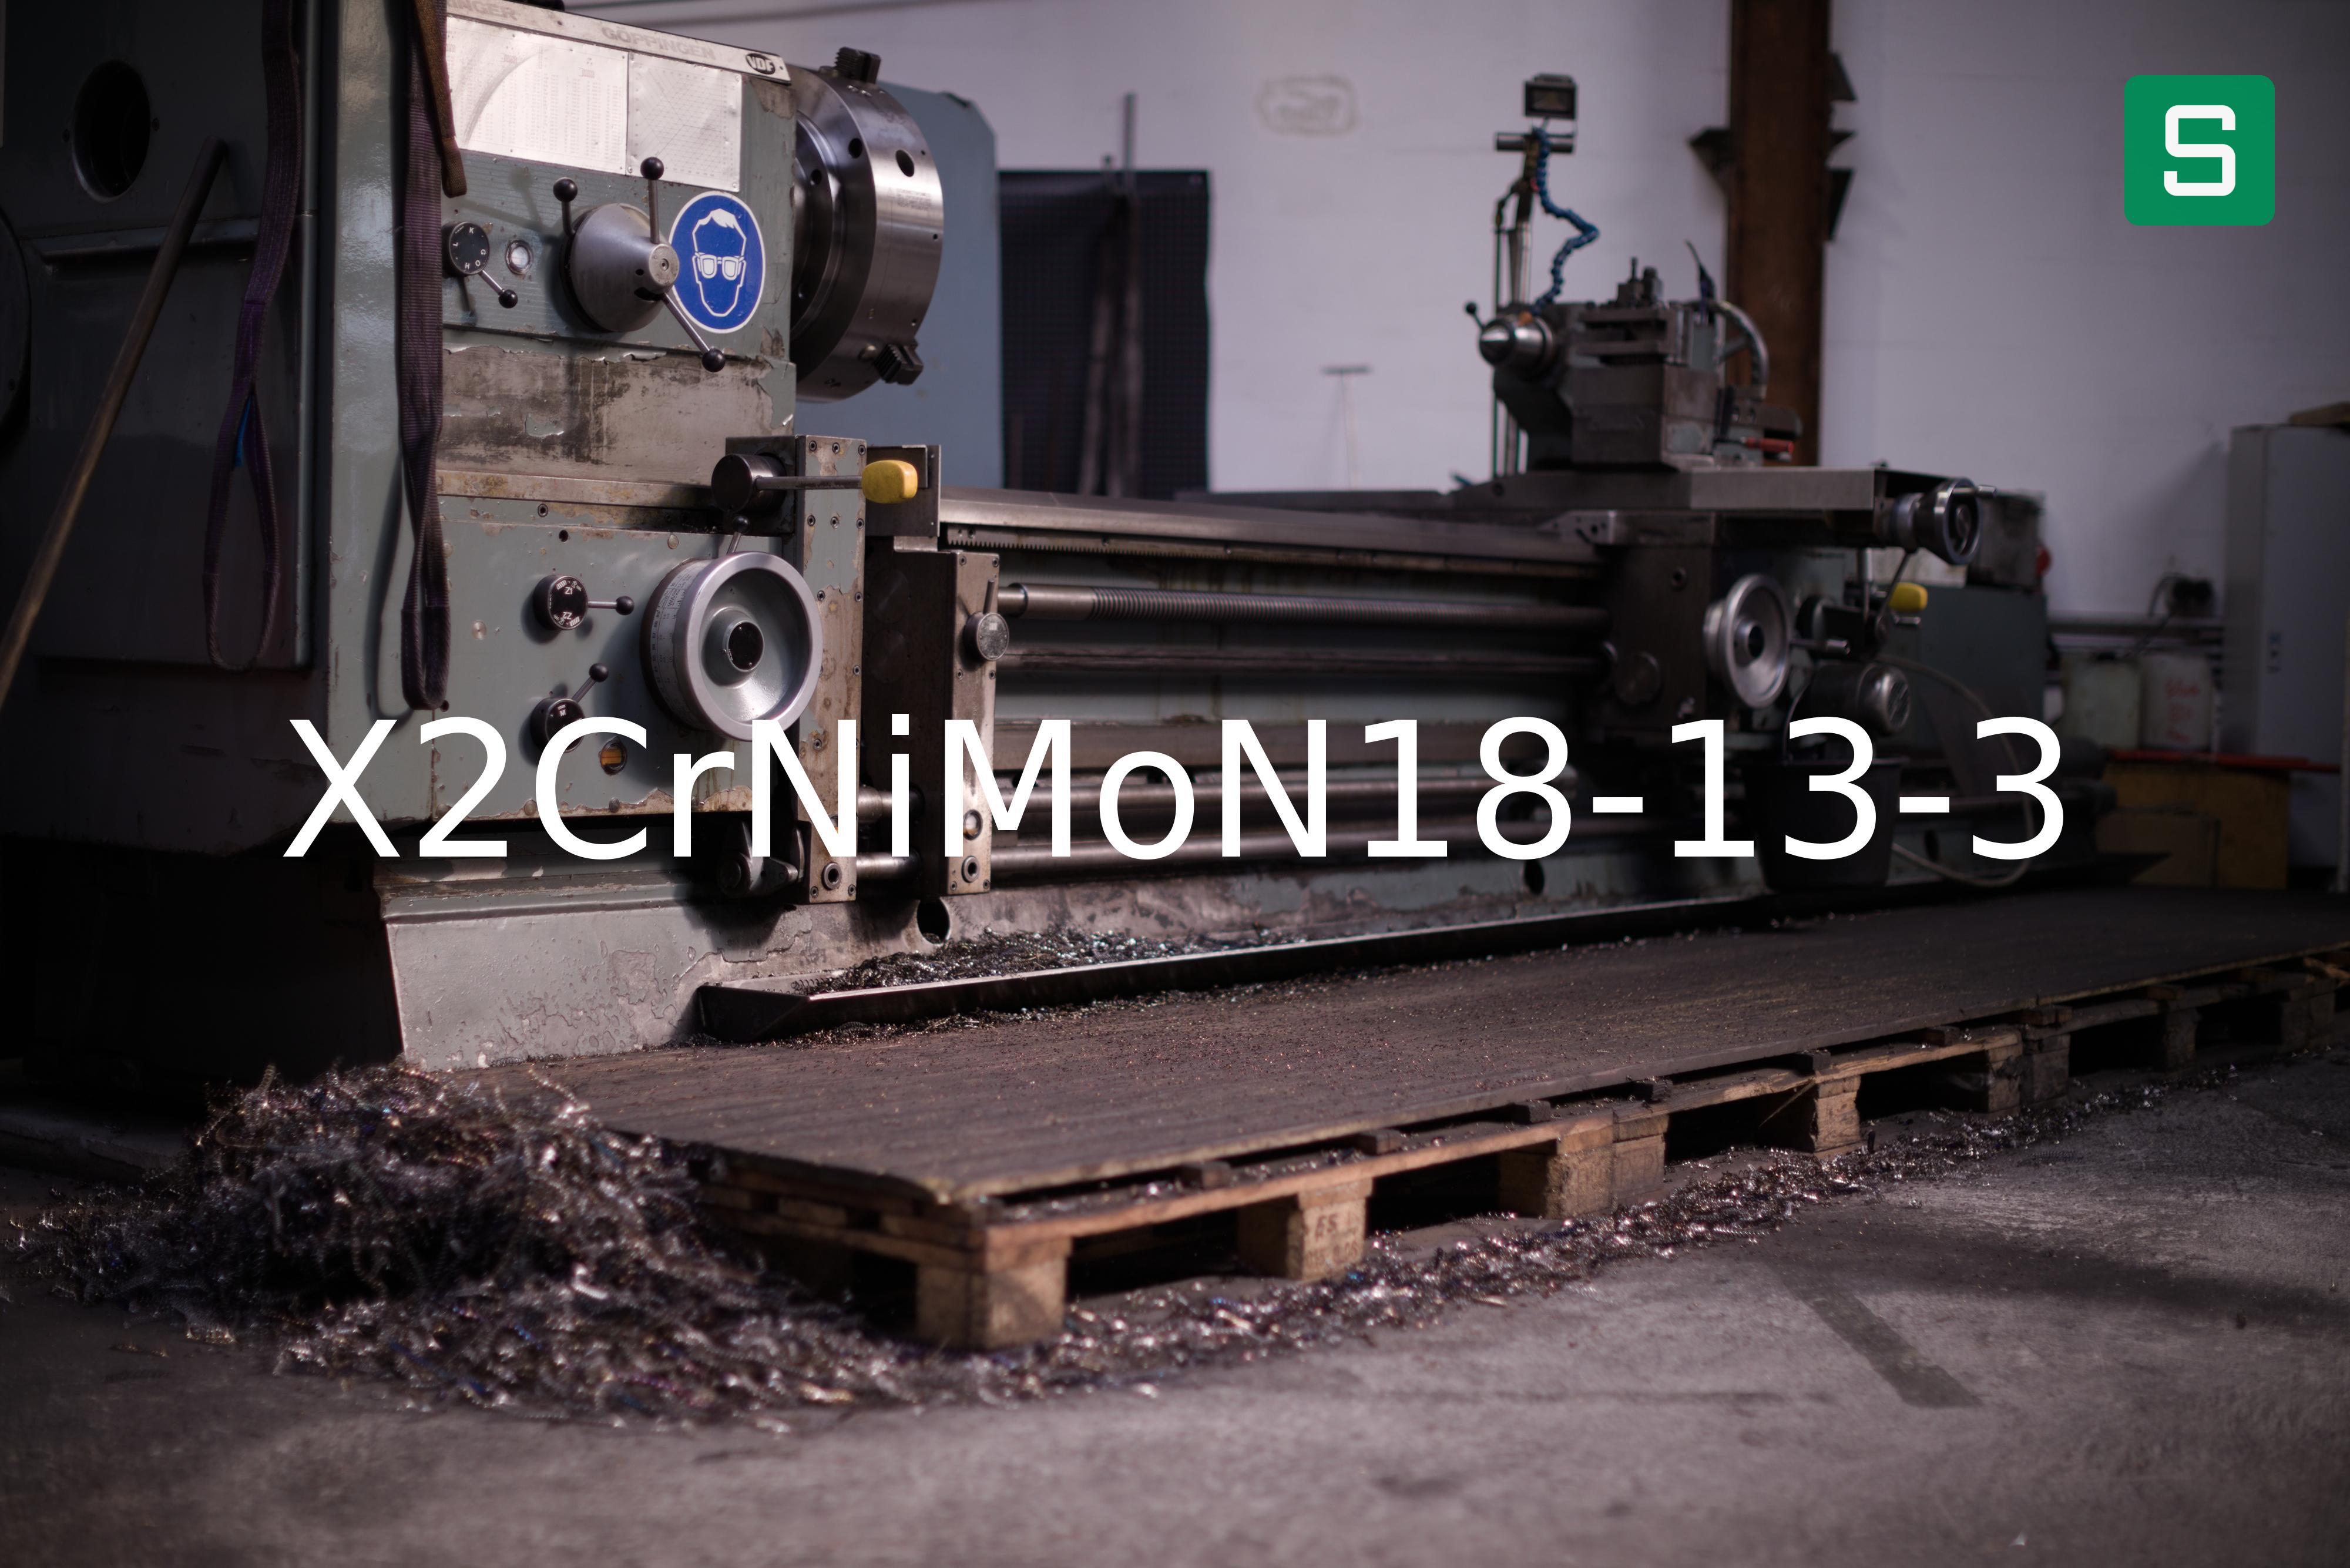 Steel Material: X2CrNiMoN18-13-3